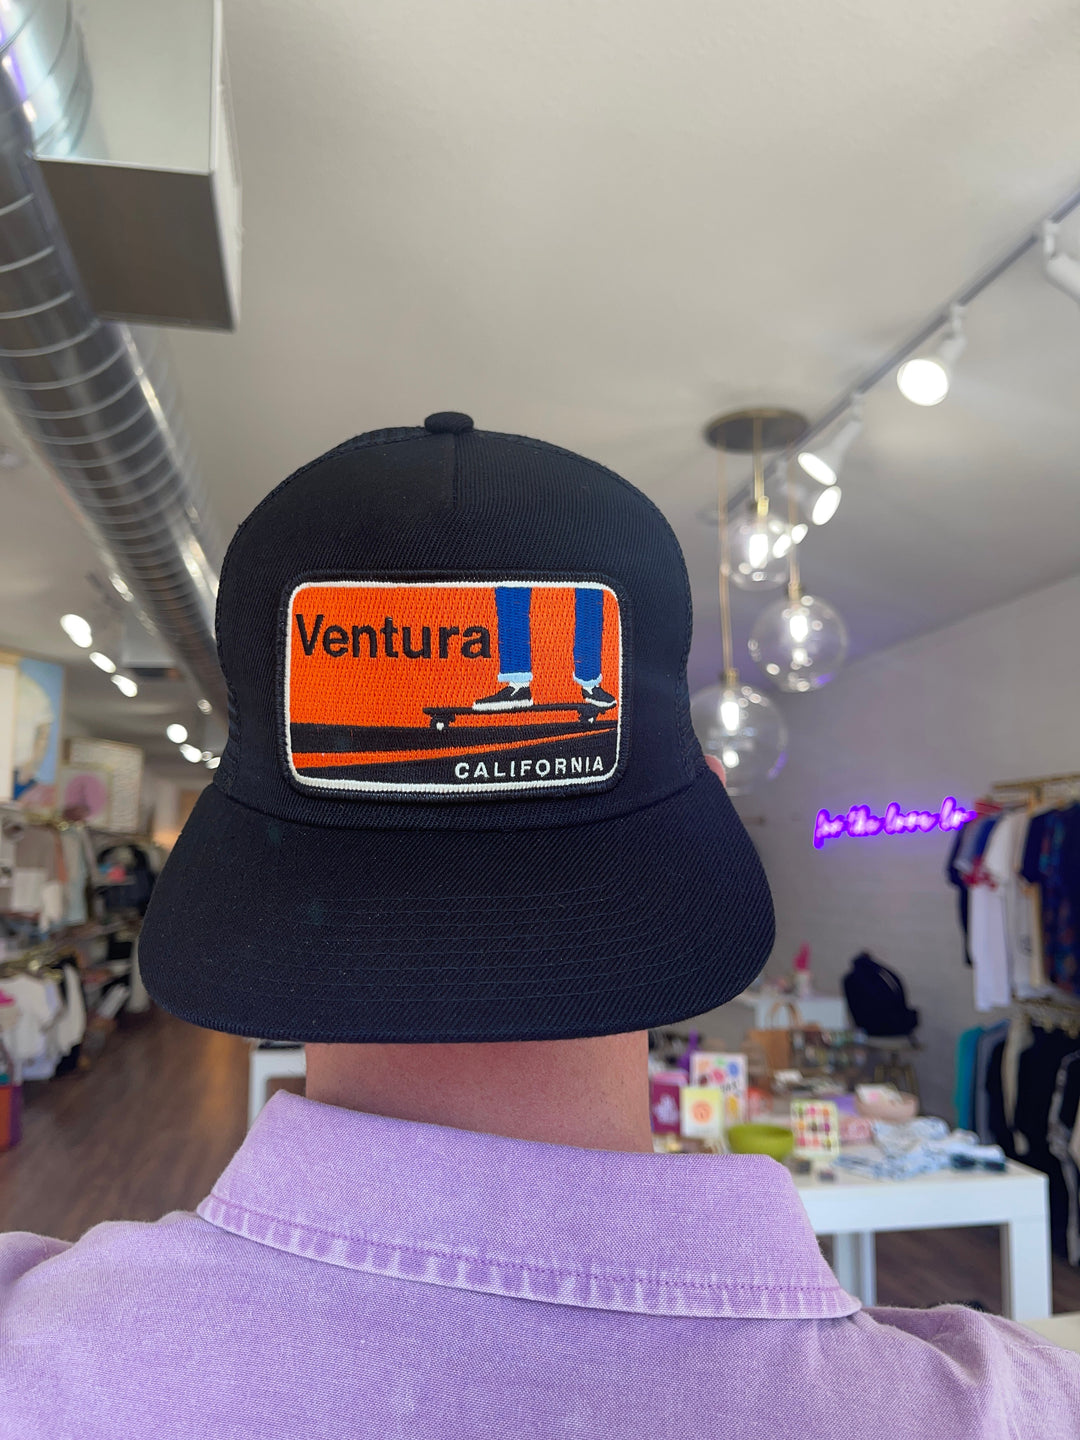 Famous Pocket Hats - Ventura